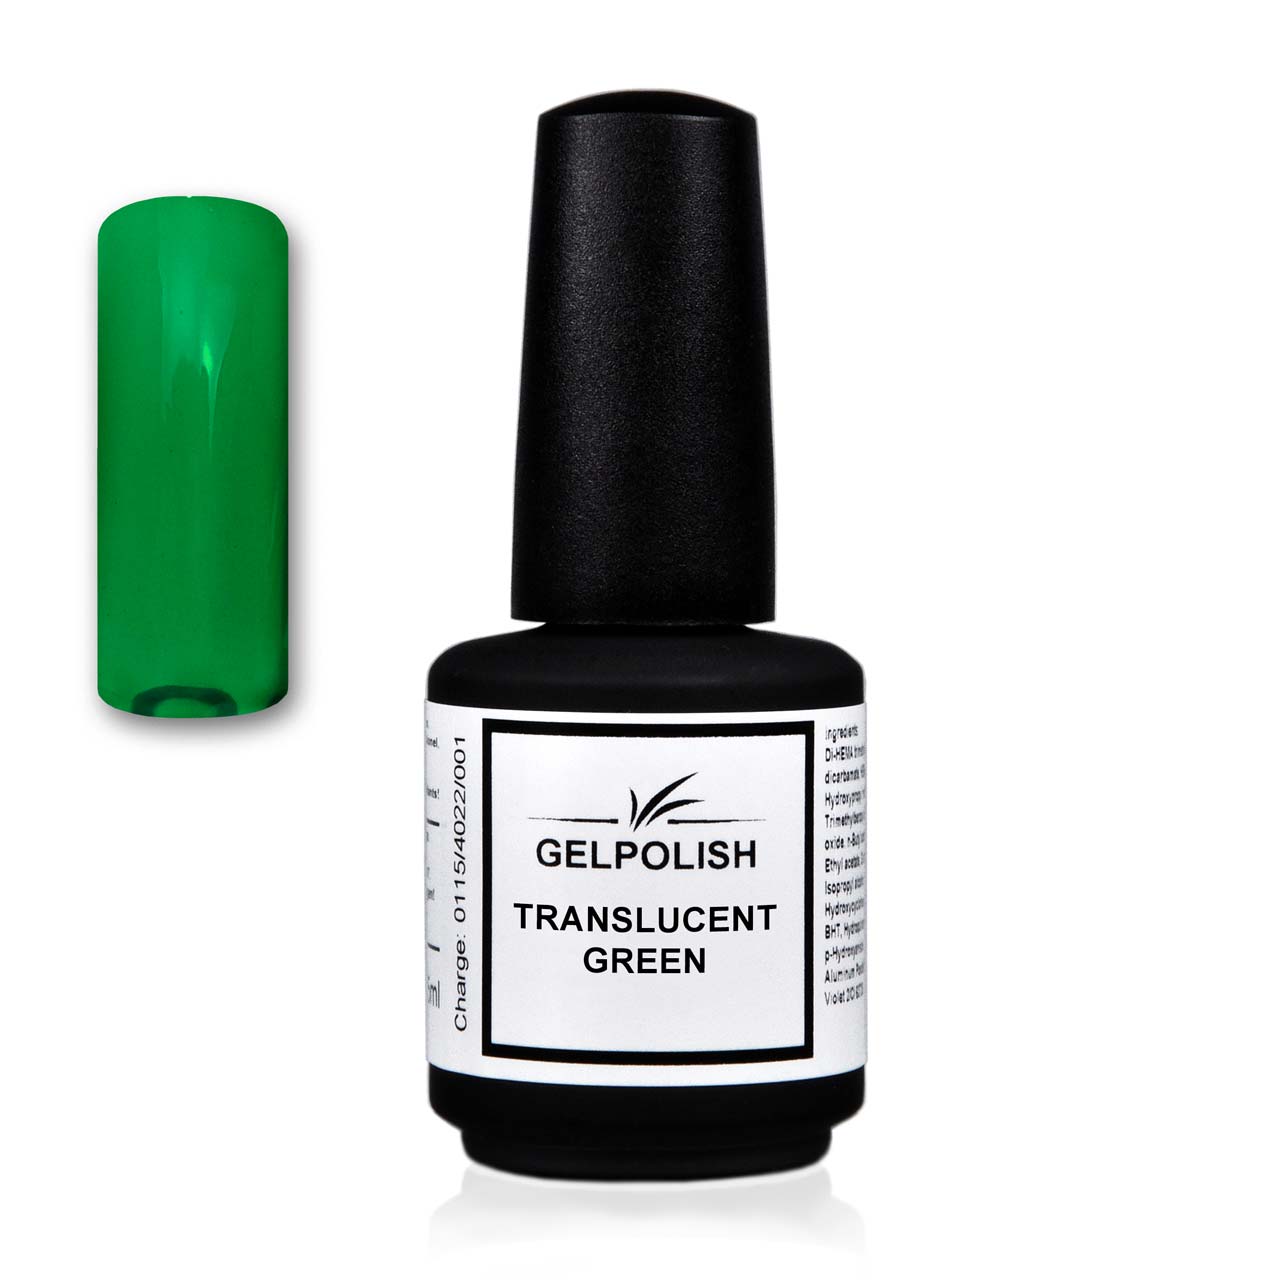 Gelpolish VSP Translucent Green